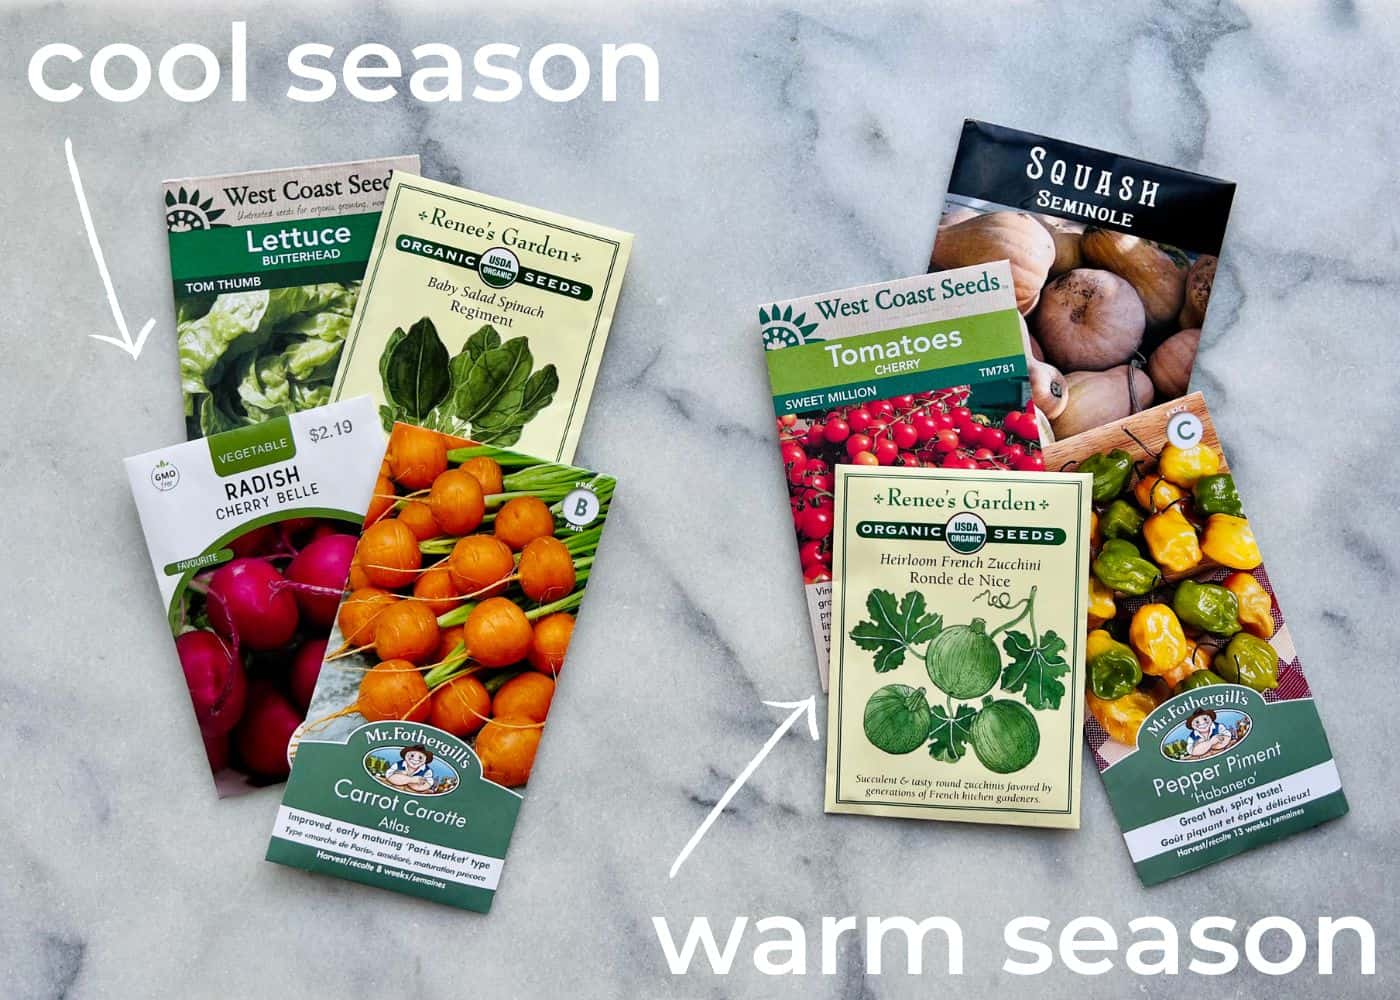 Cool season vegetables vs warm season veggies